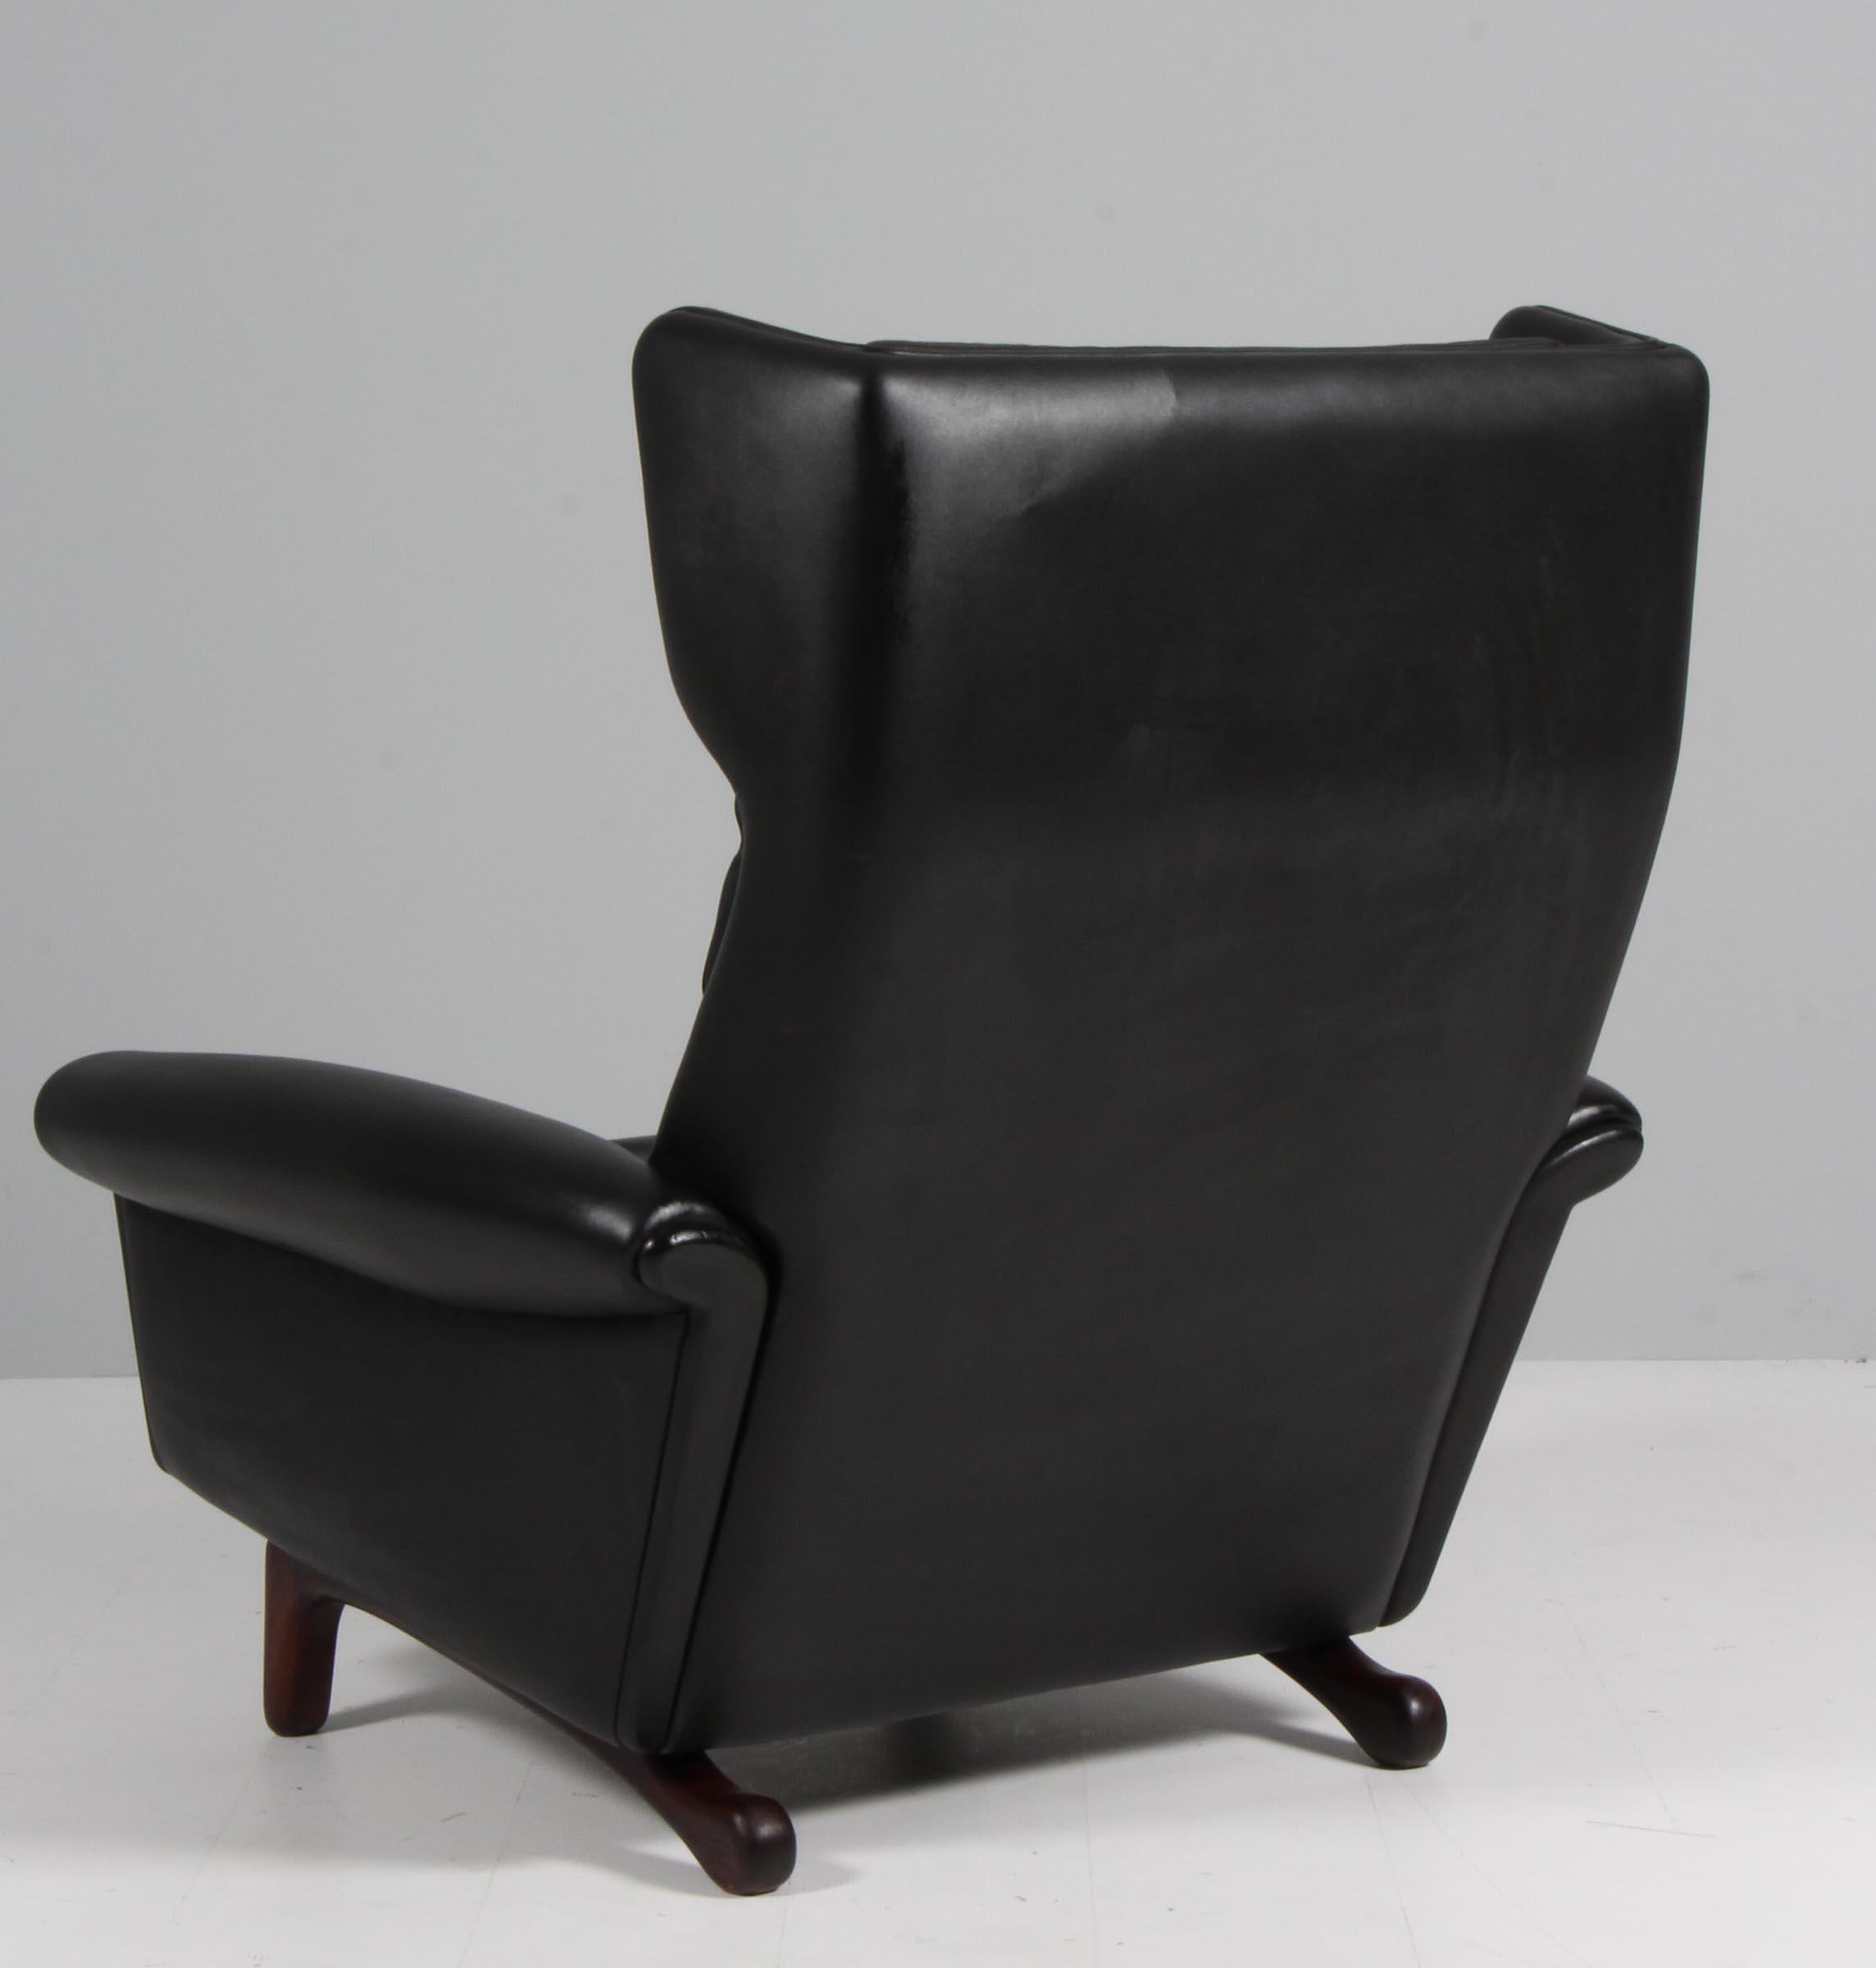 Aage Christiansen lounge chair in original black leather.

Legs of stained wood.

Made by Erhardsen & Andersen / Eran møbler.